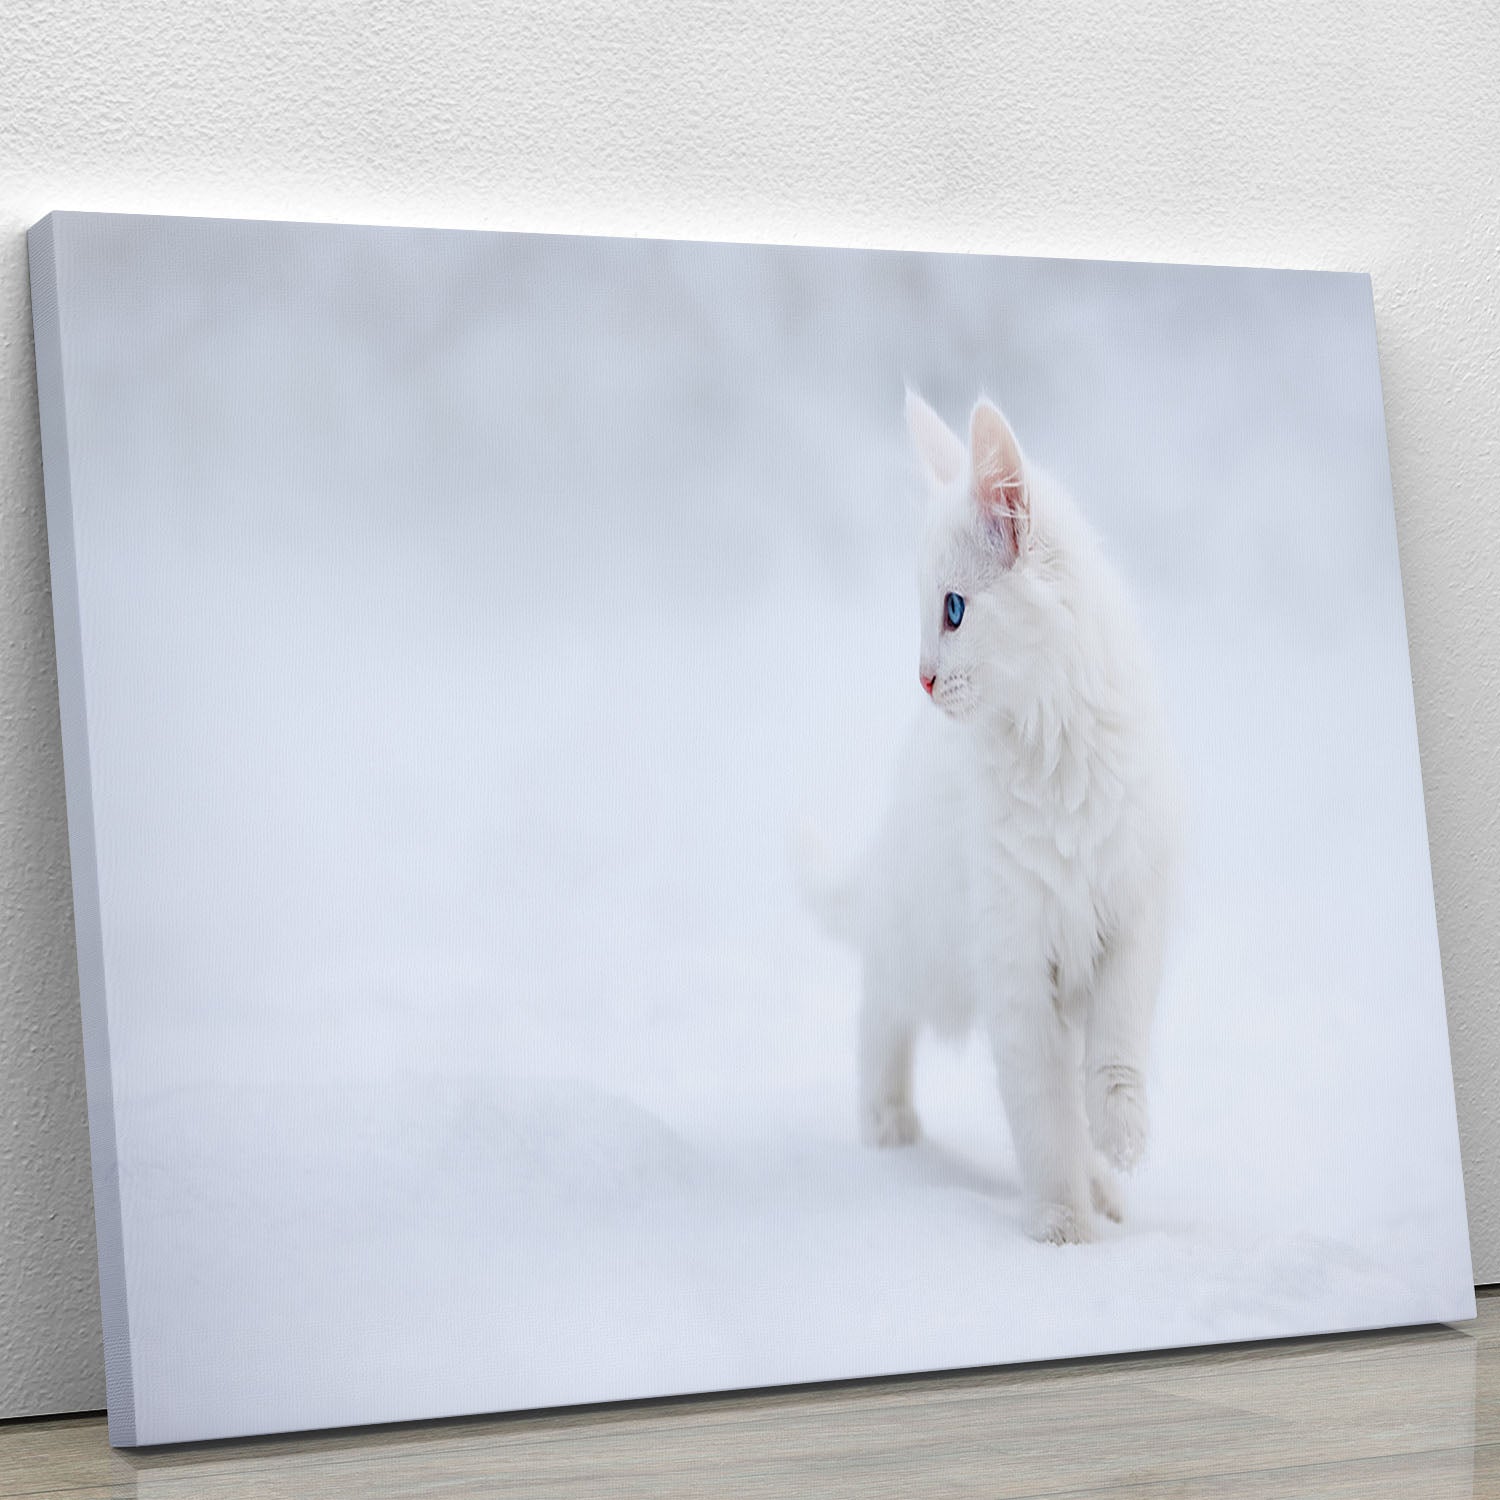 Kitten White as Snow Canvas Print or Poster - Canvas Art Rocks - 1